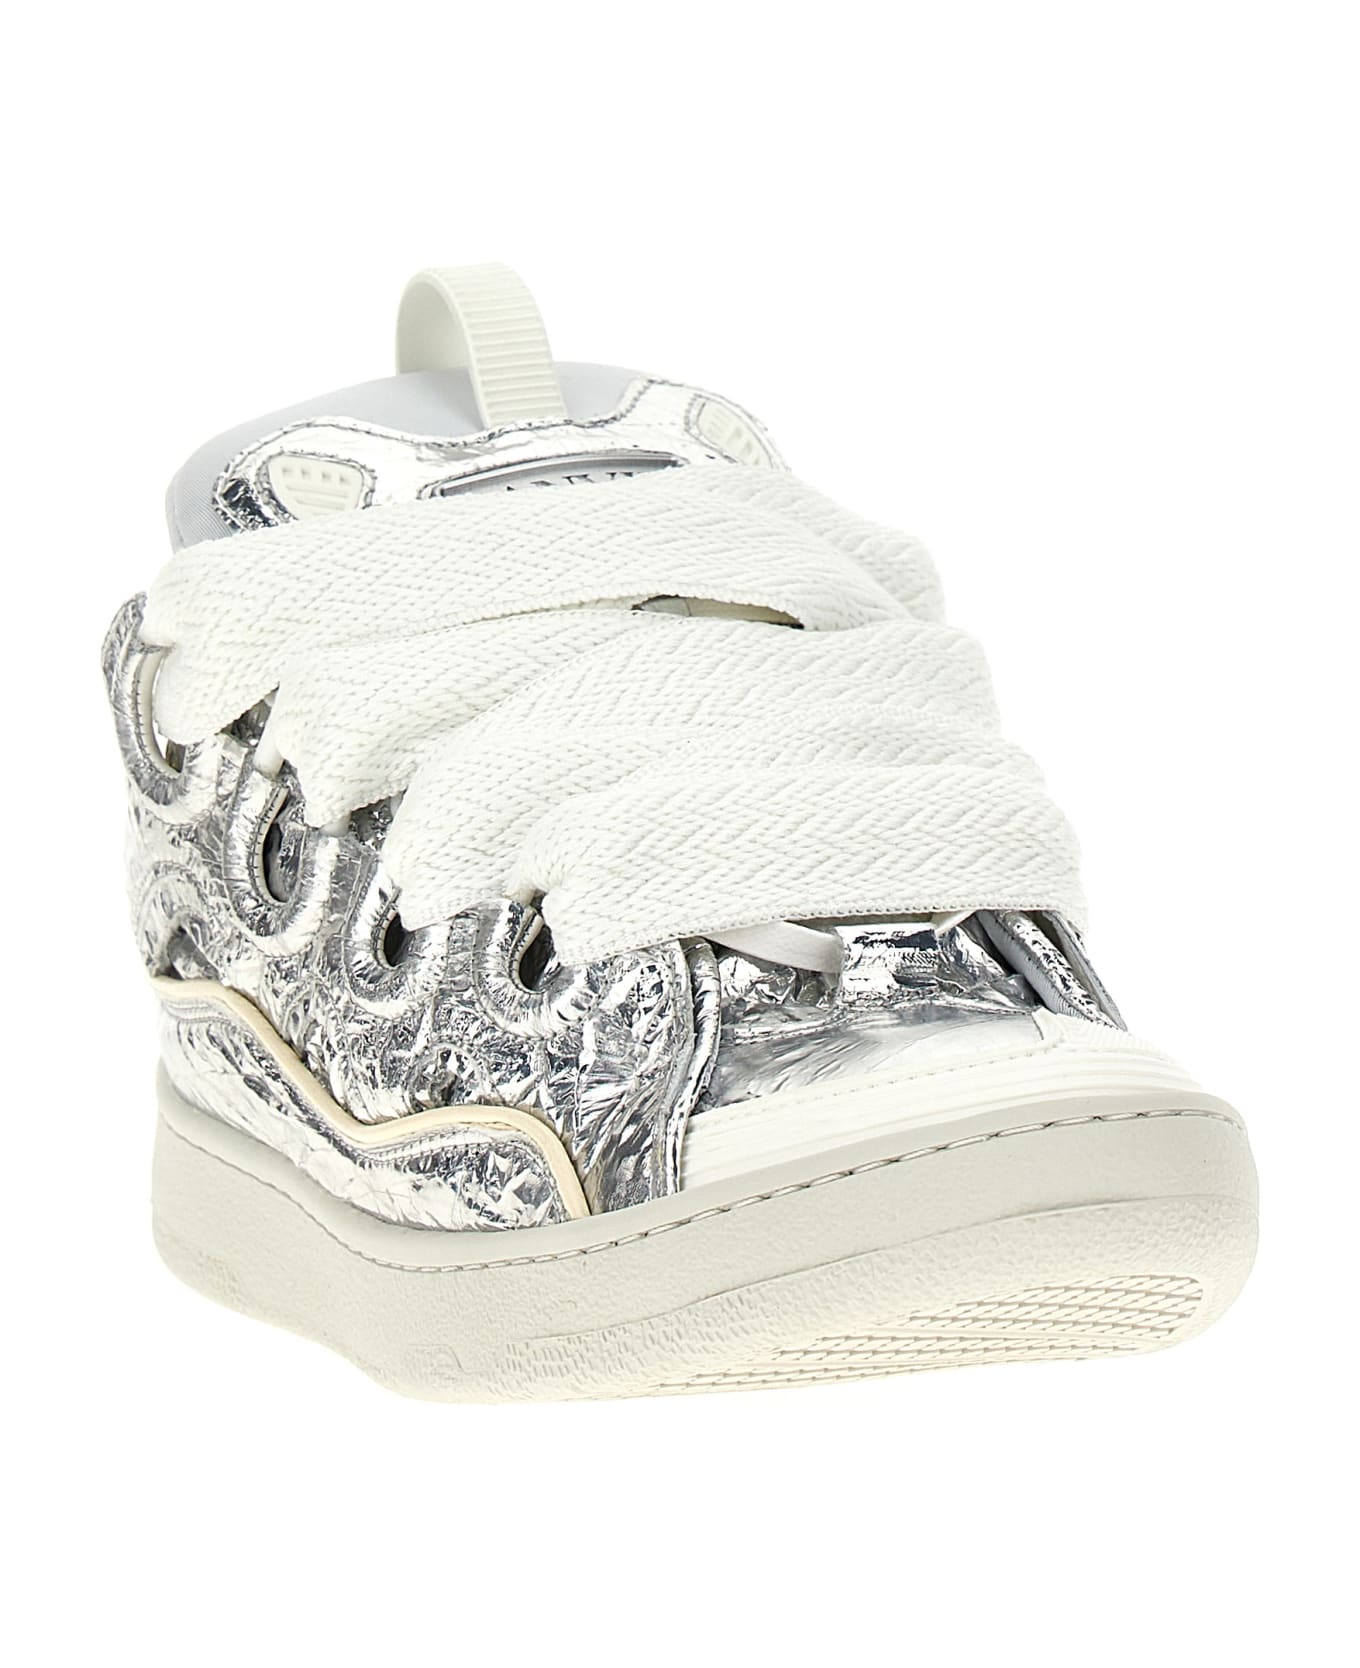 Lanvin 'curb' Sneakers - SILVER/WHITE